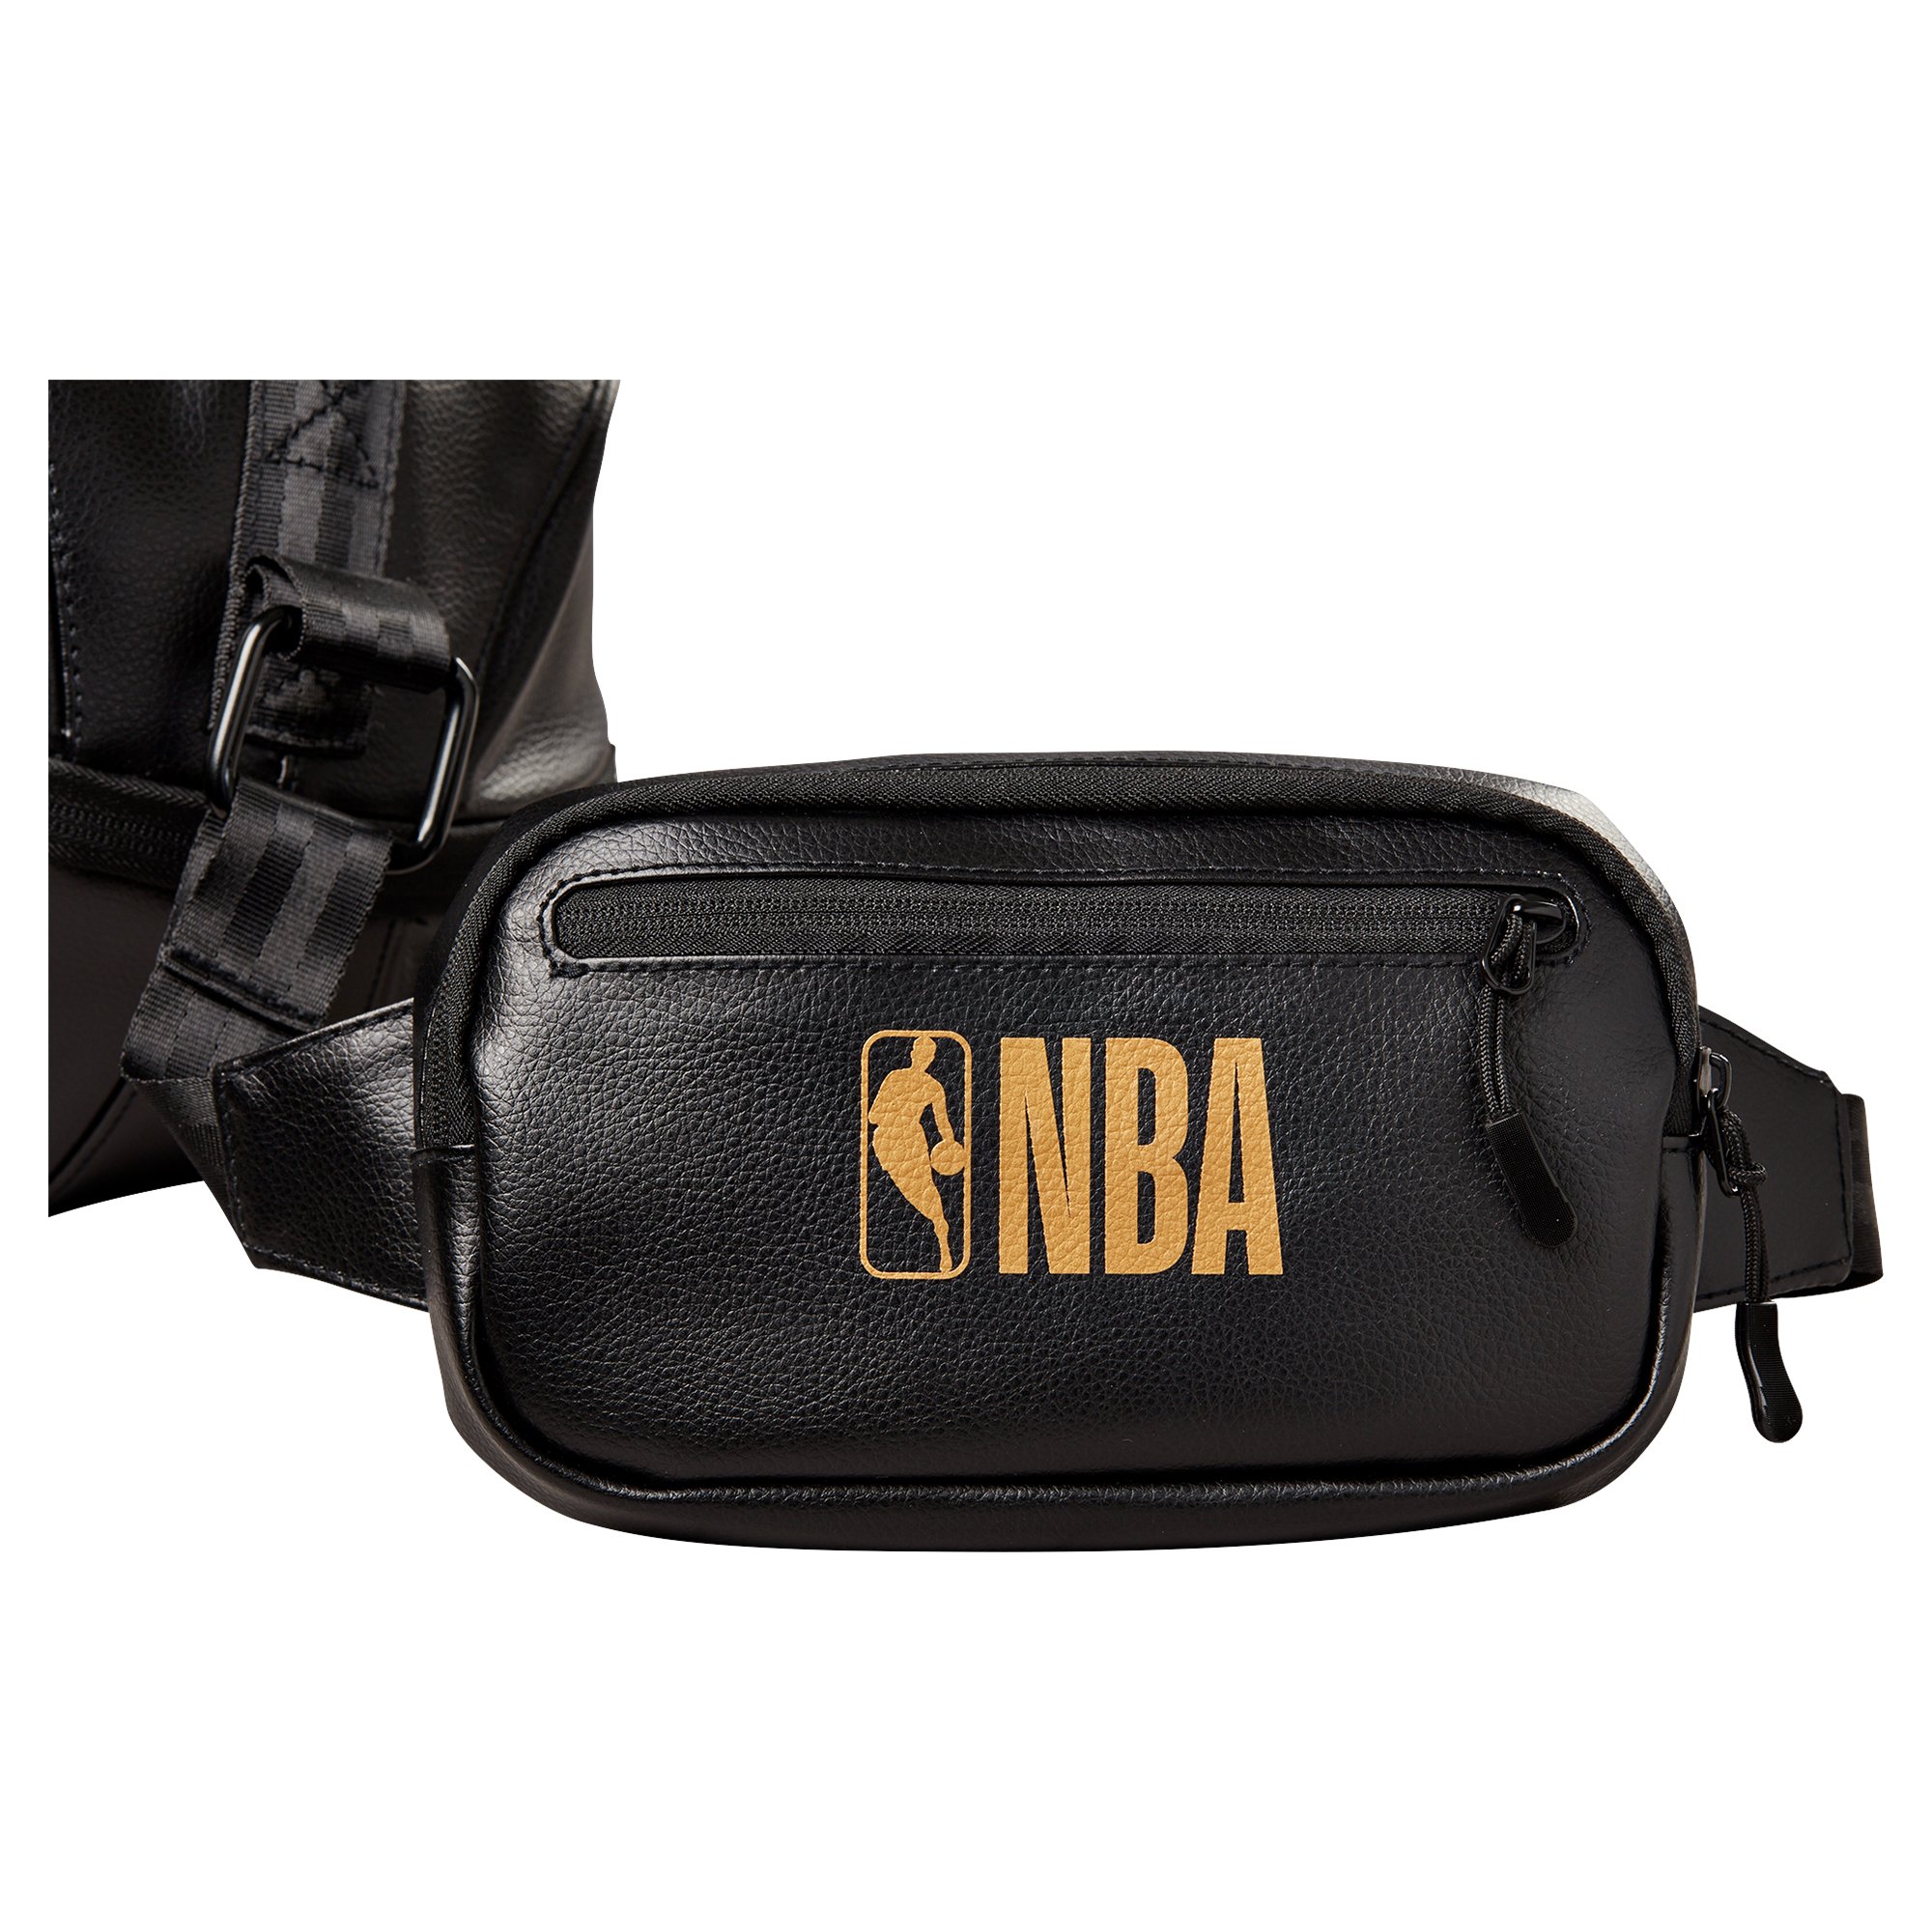 Wilson NBA 3 In 1 Basketball Carry Bag